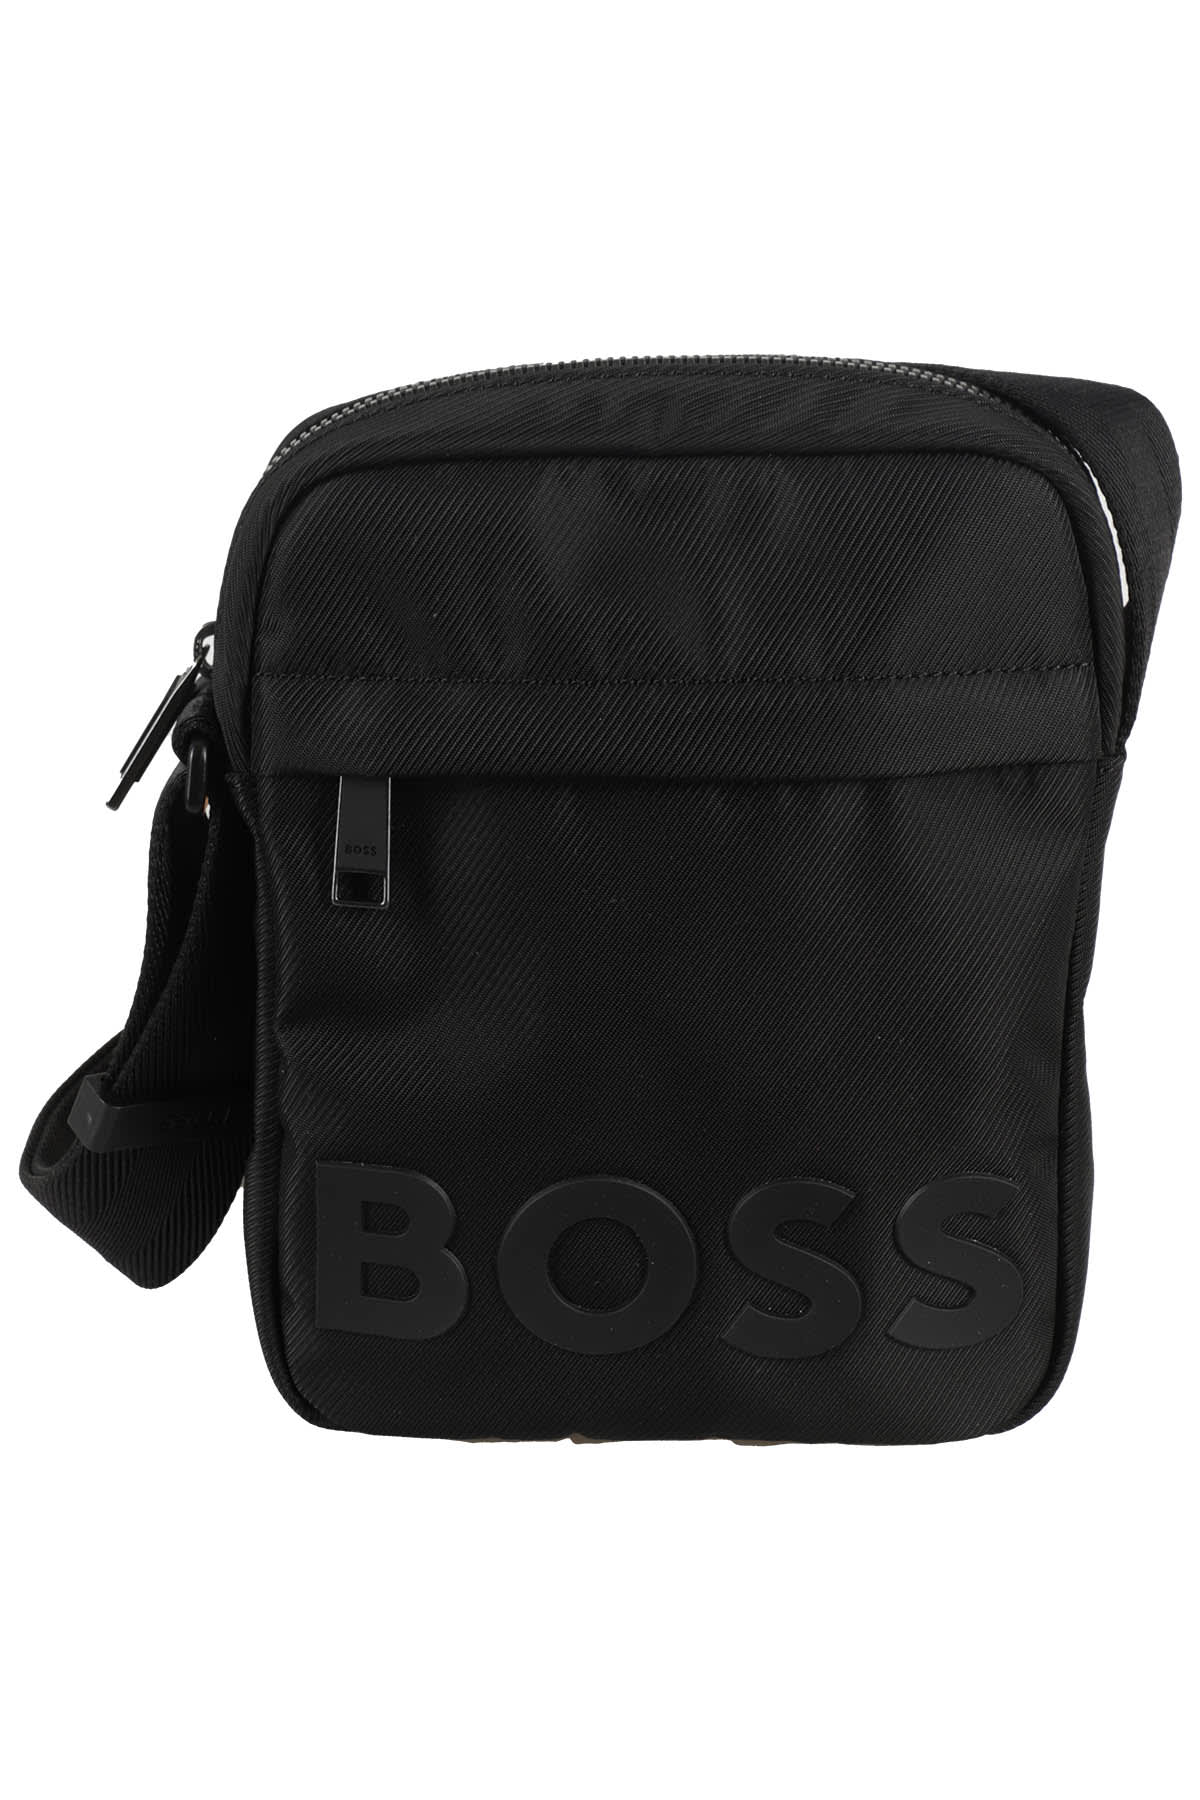 Hugo Boss Catch 2.0 In Black